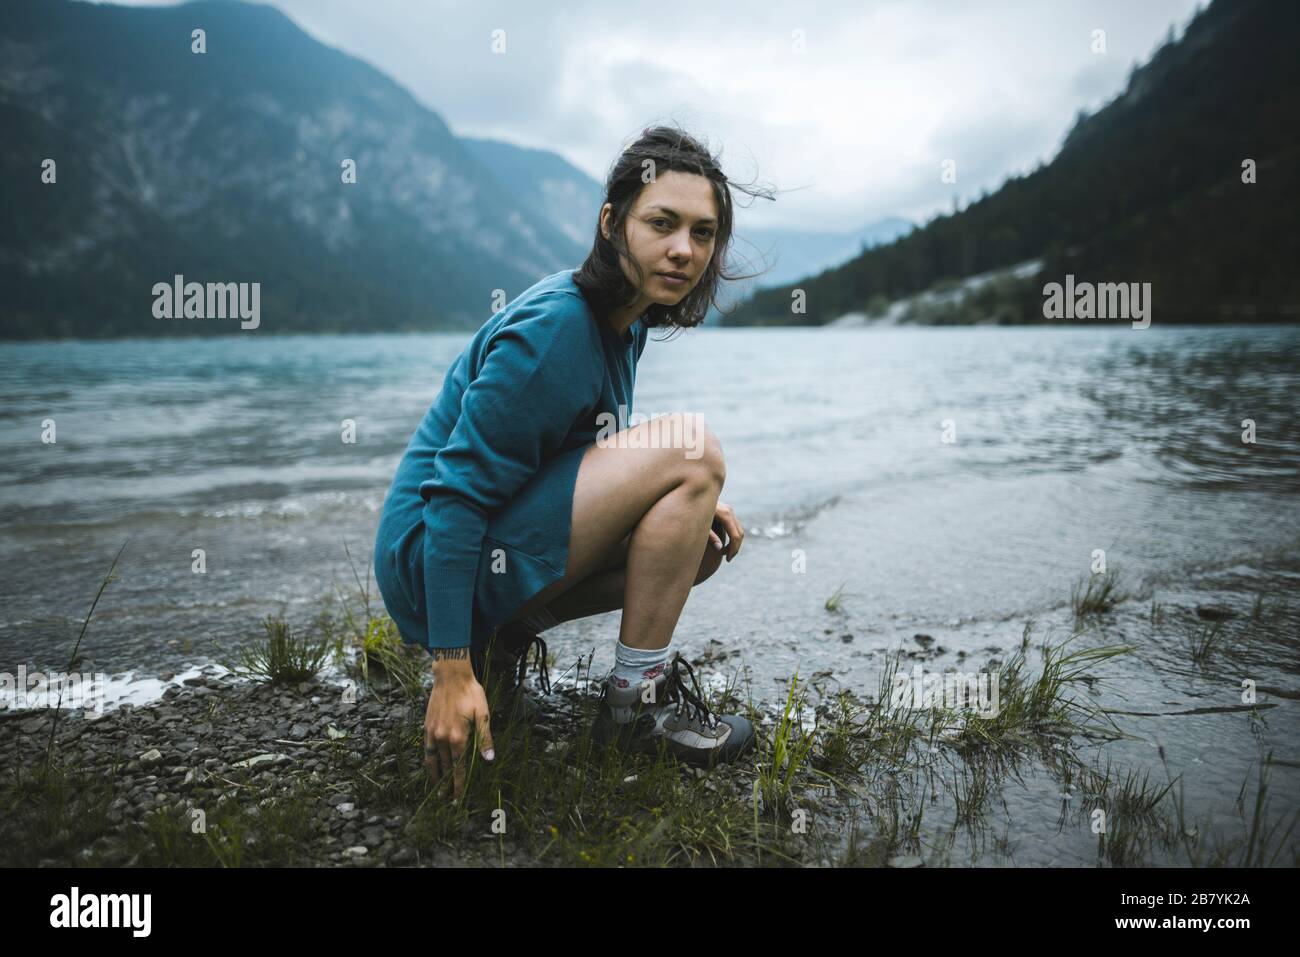 Young woman crouching by lake Stock Photo